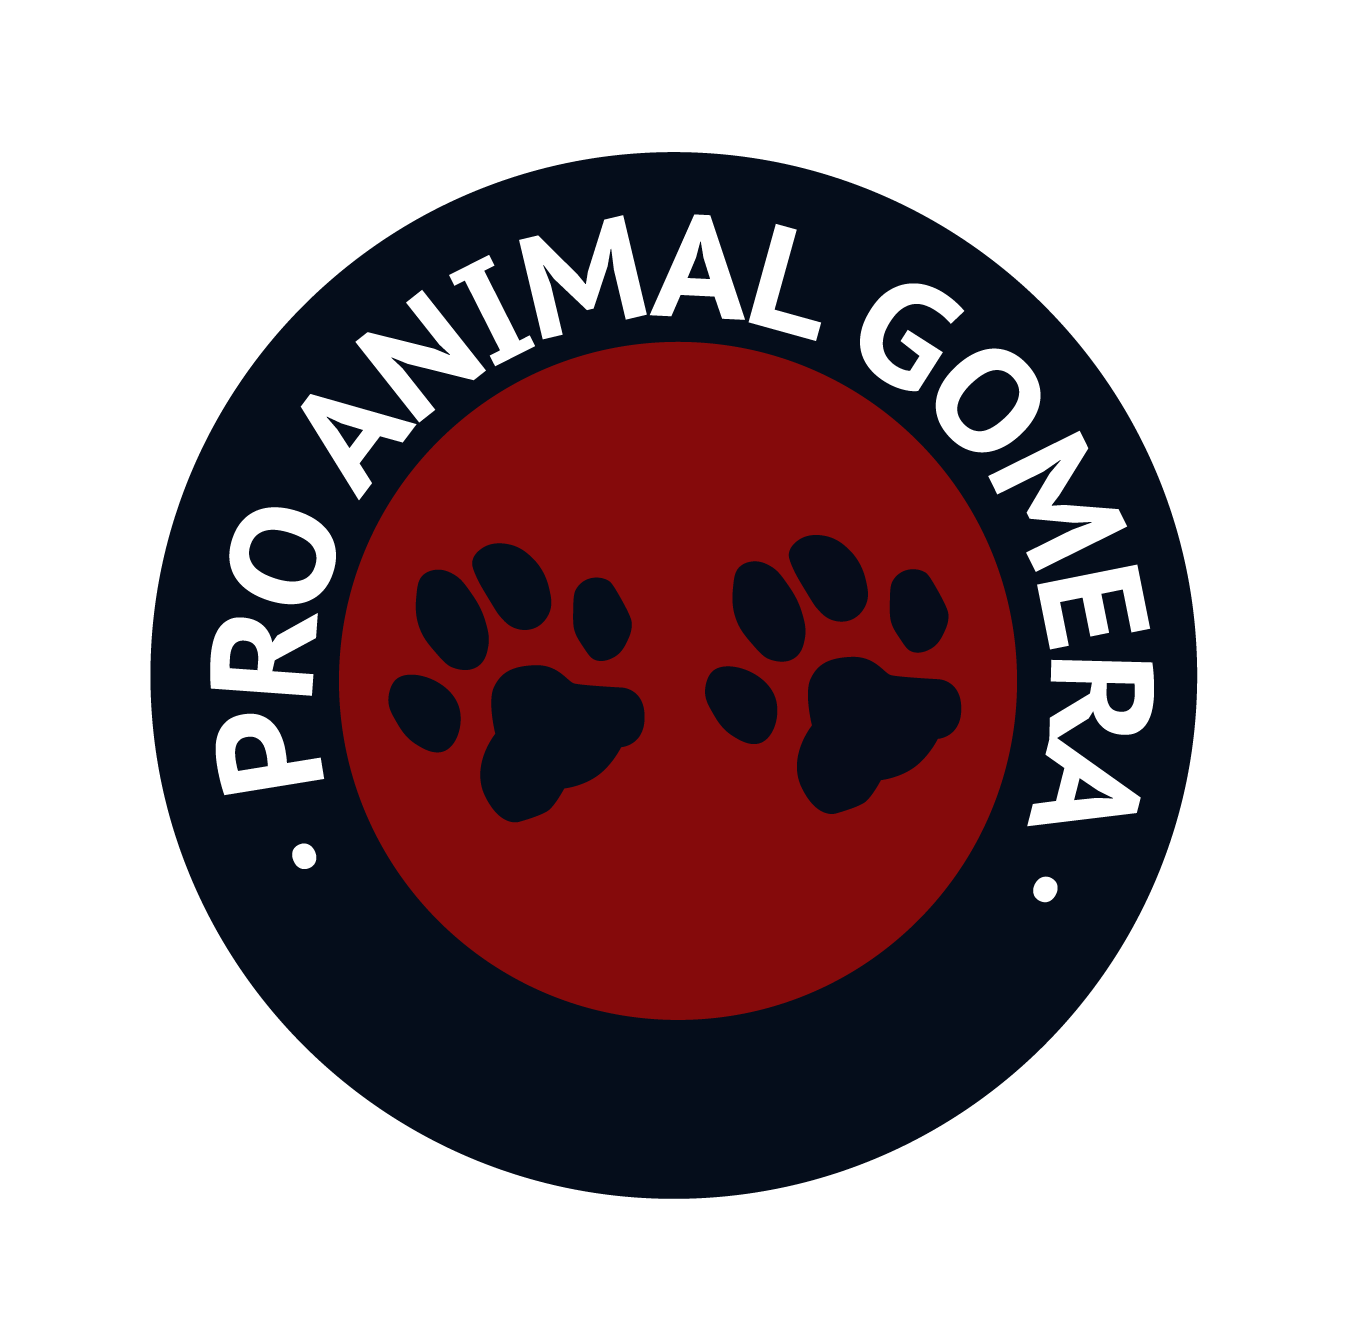 Pro Animal Gomera